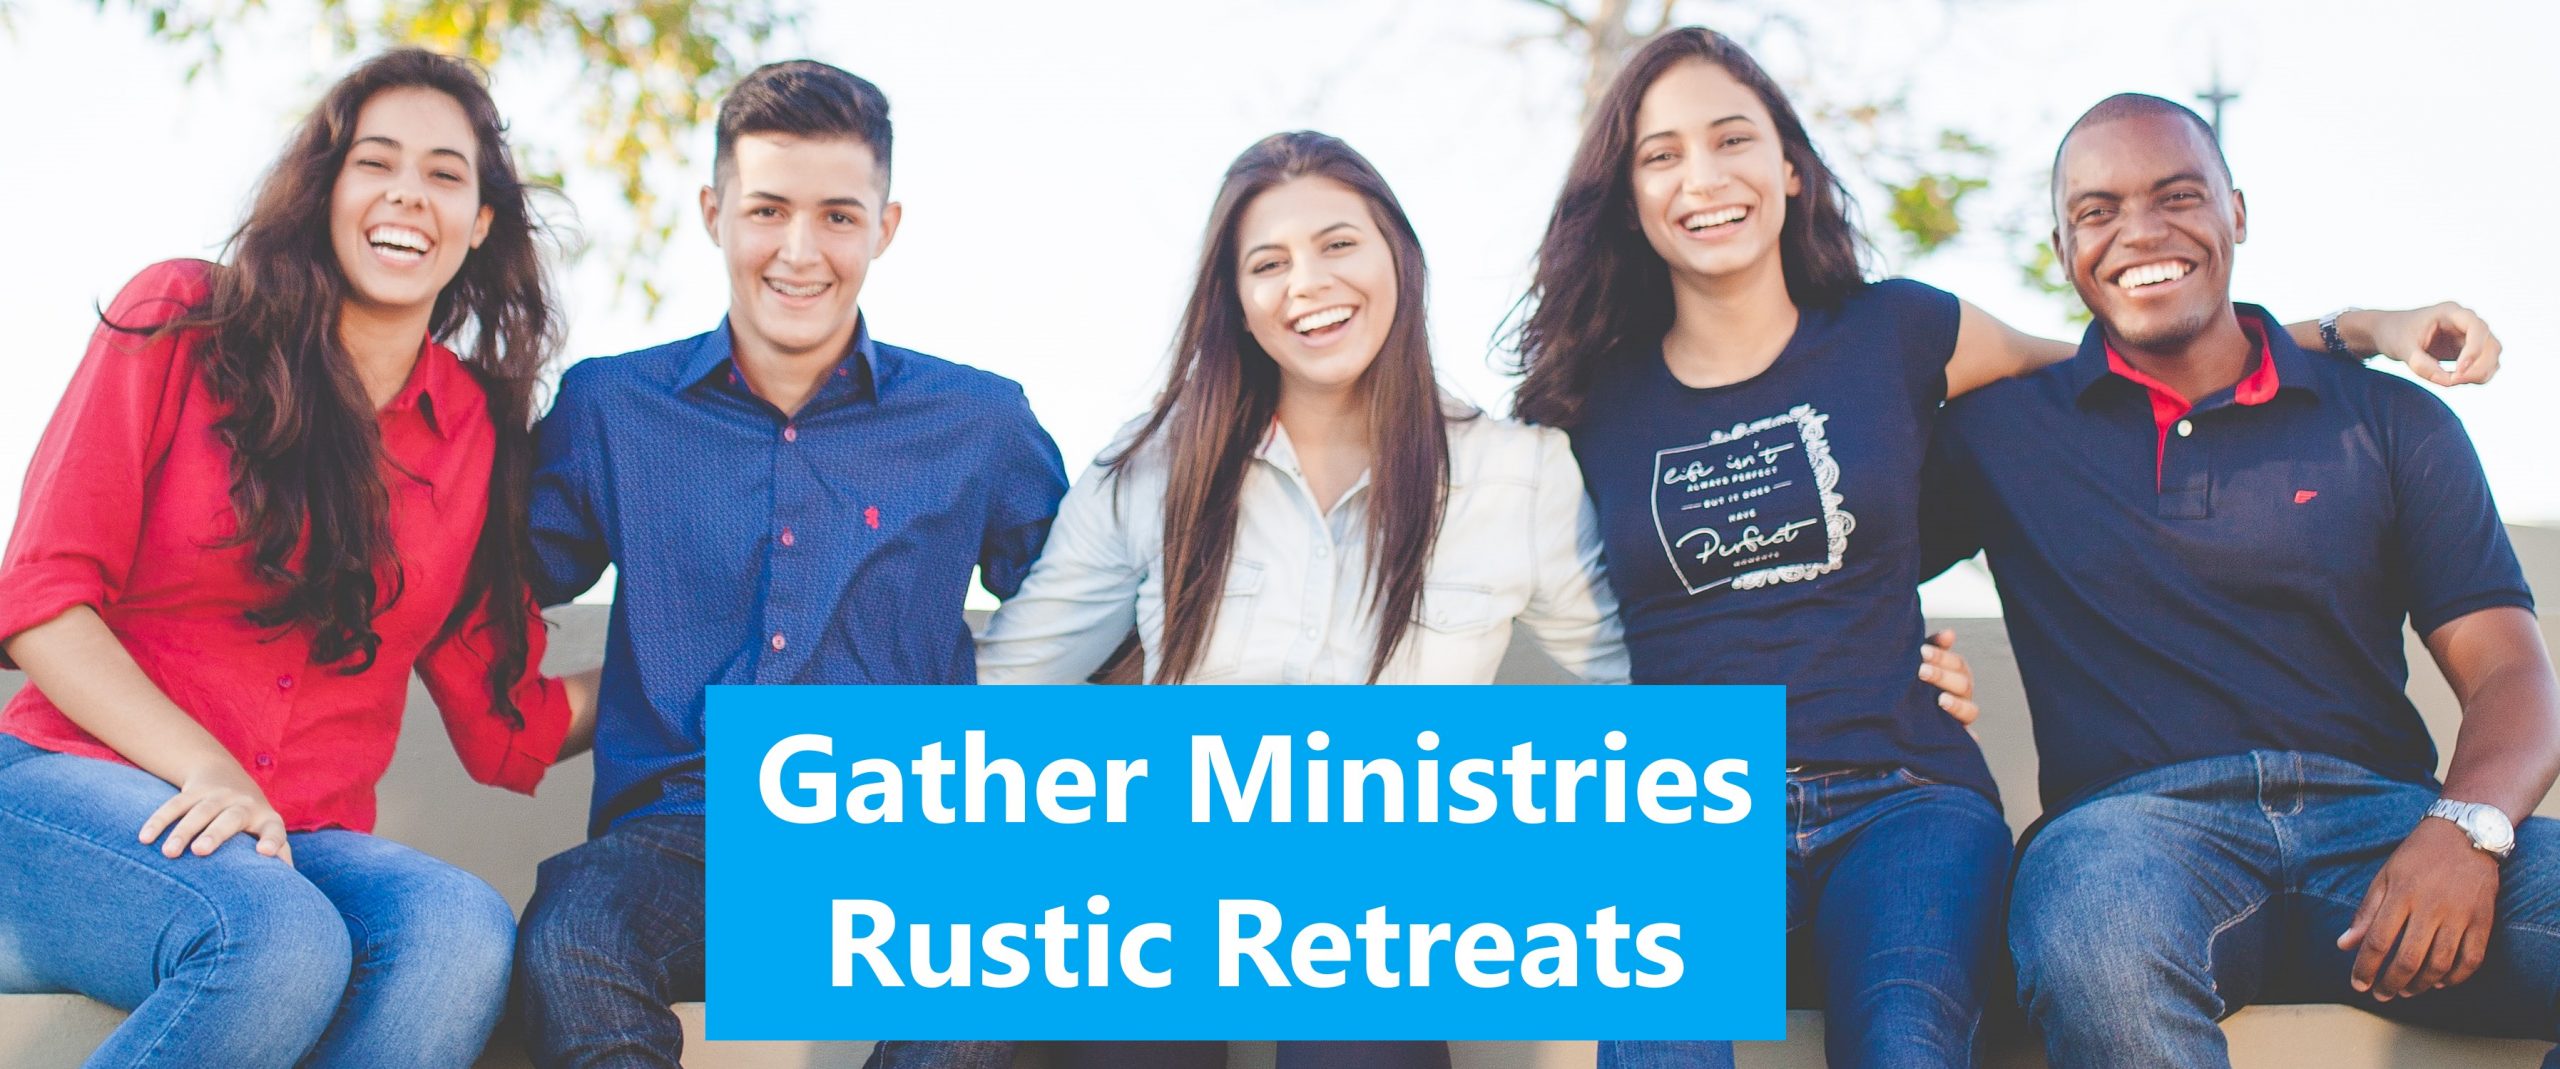 Rustic Retreats - Gather Ministries